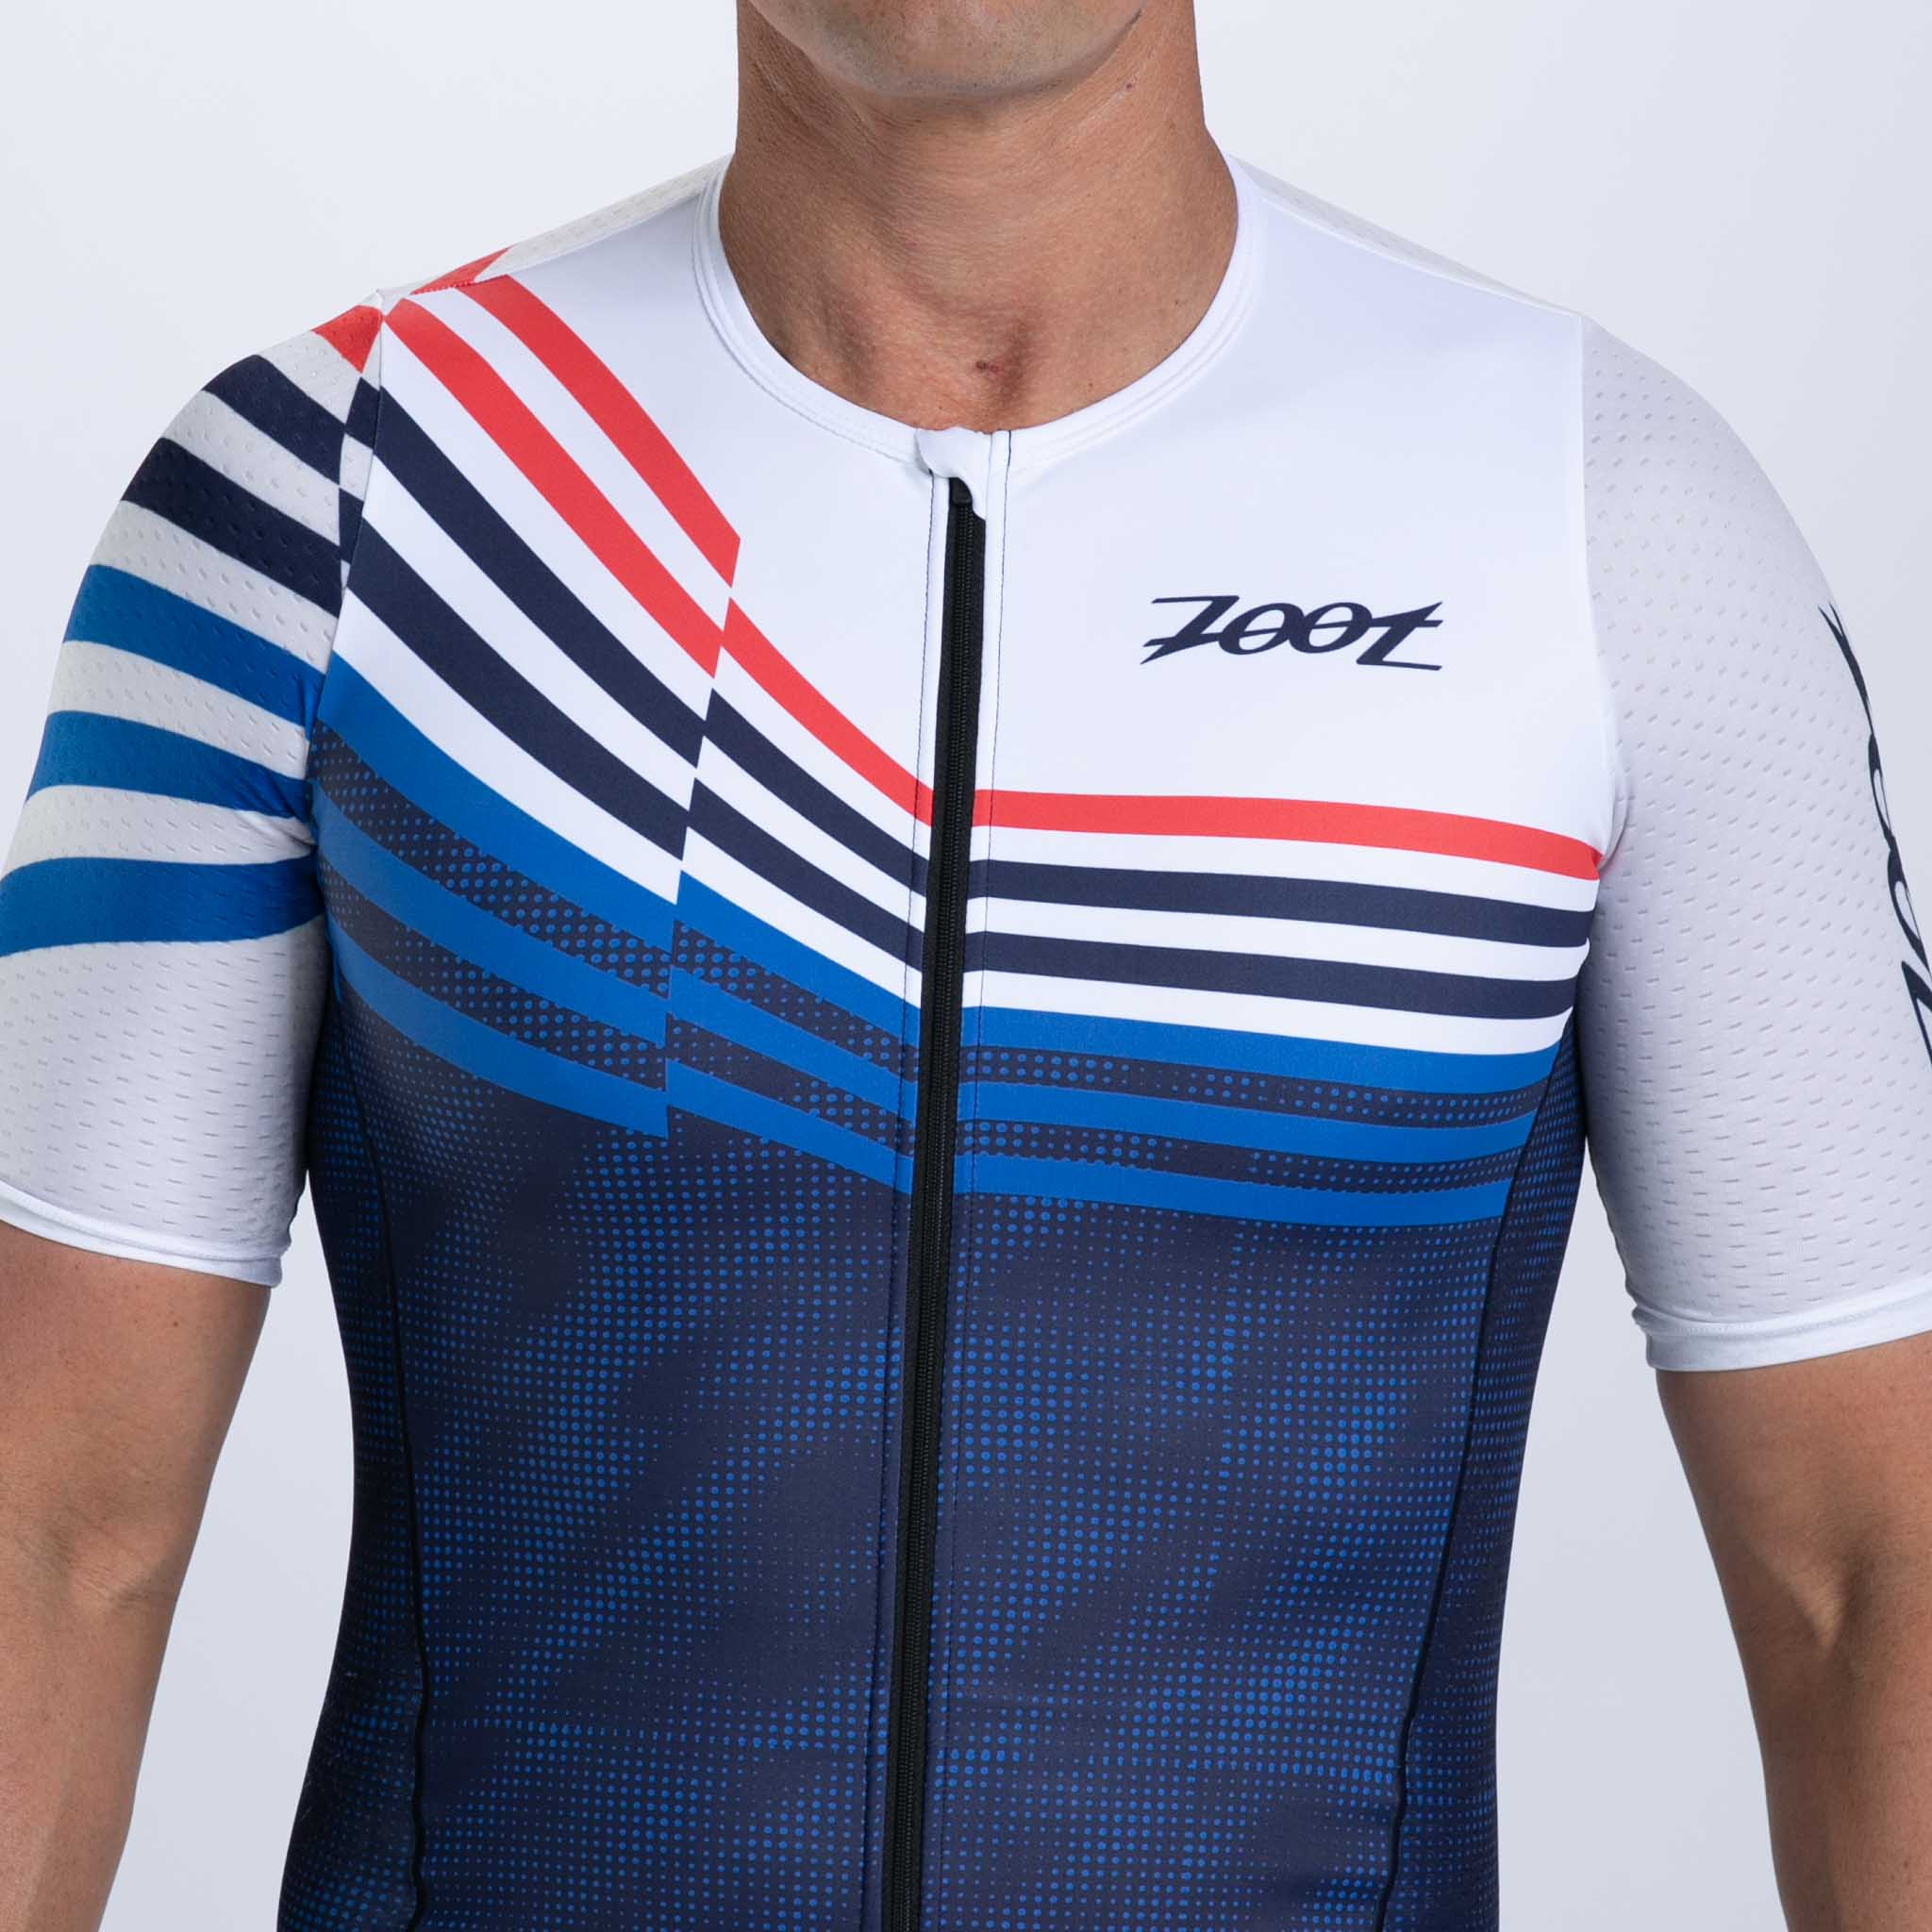 Zoot Sports TRI TOPS Men's Ltd Tri Aero Jersey - Cote d'Azur